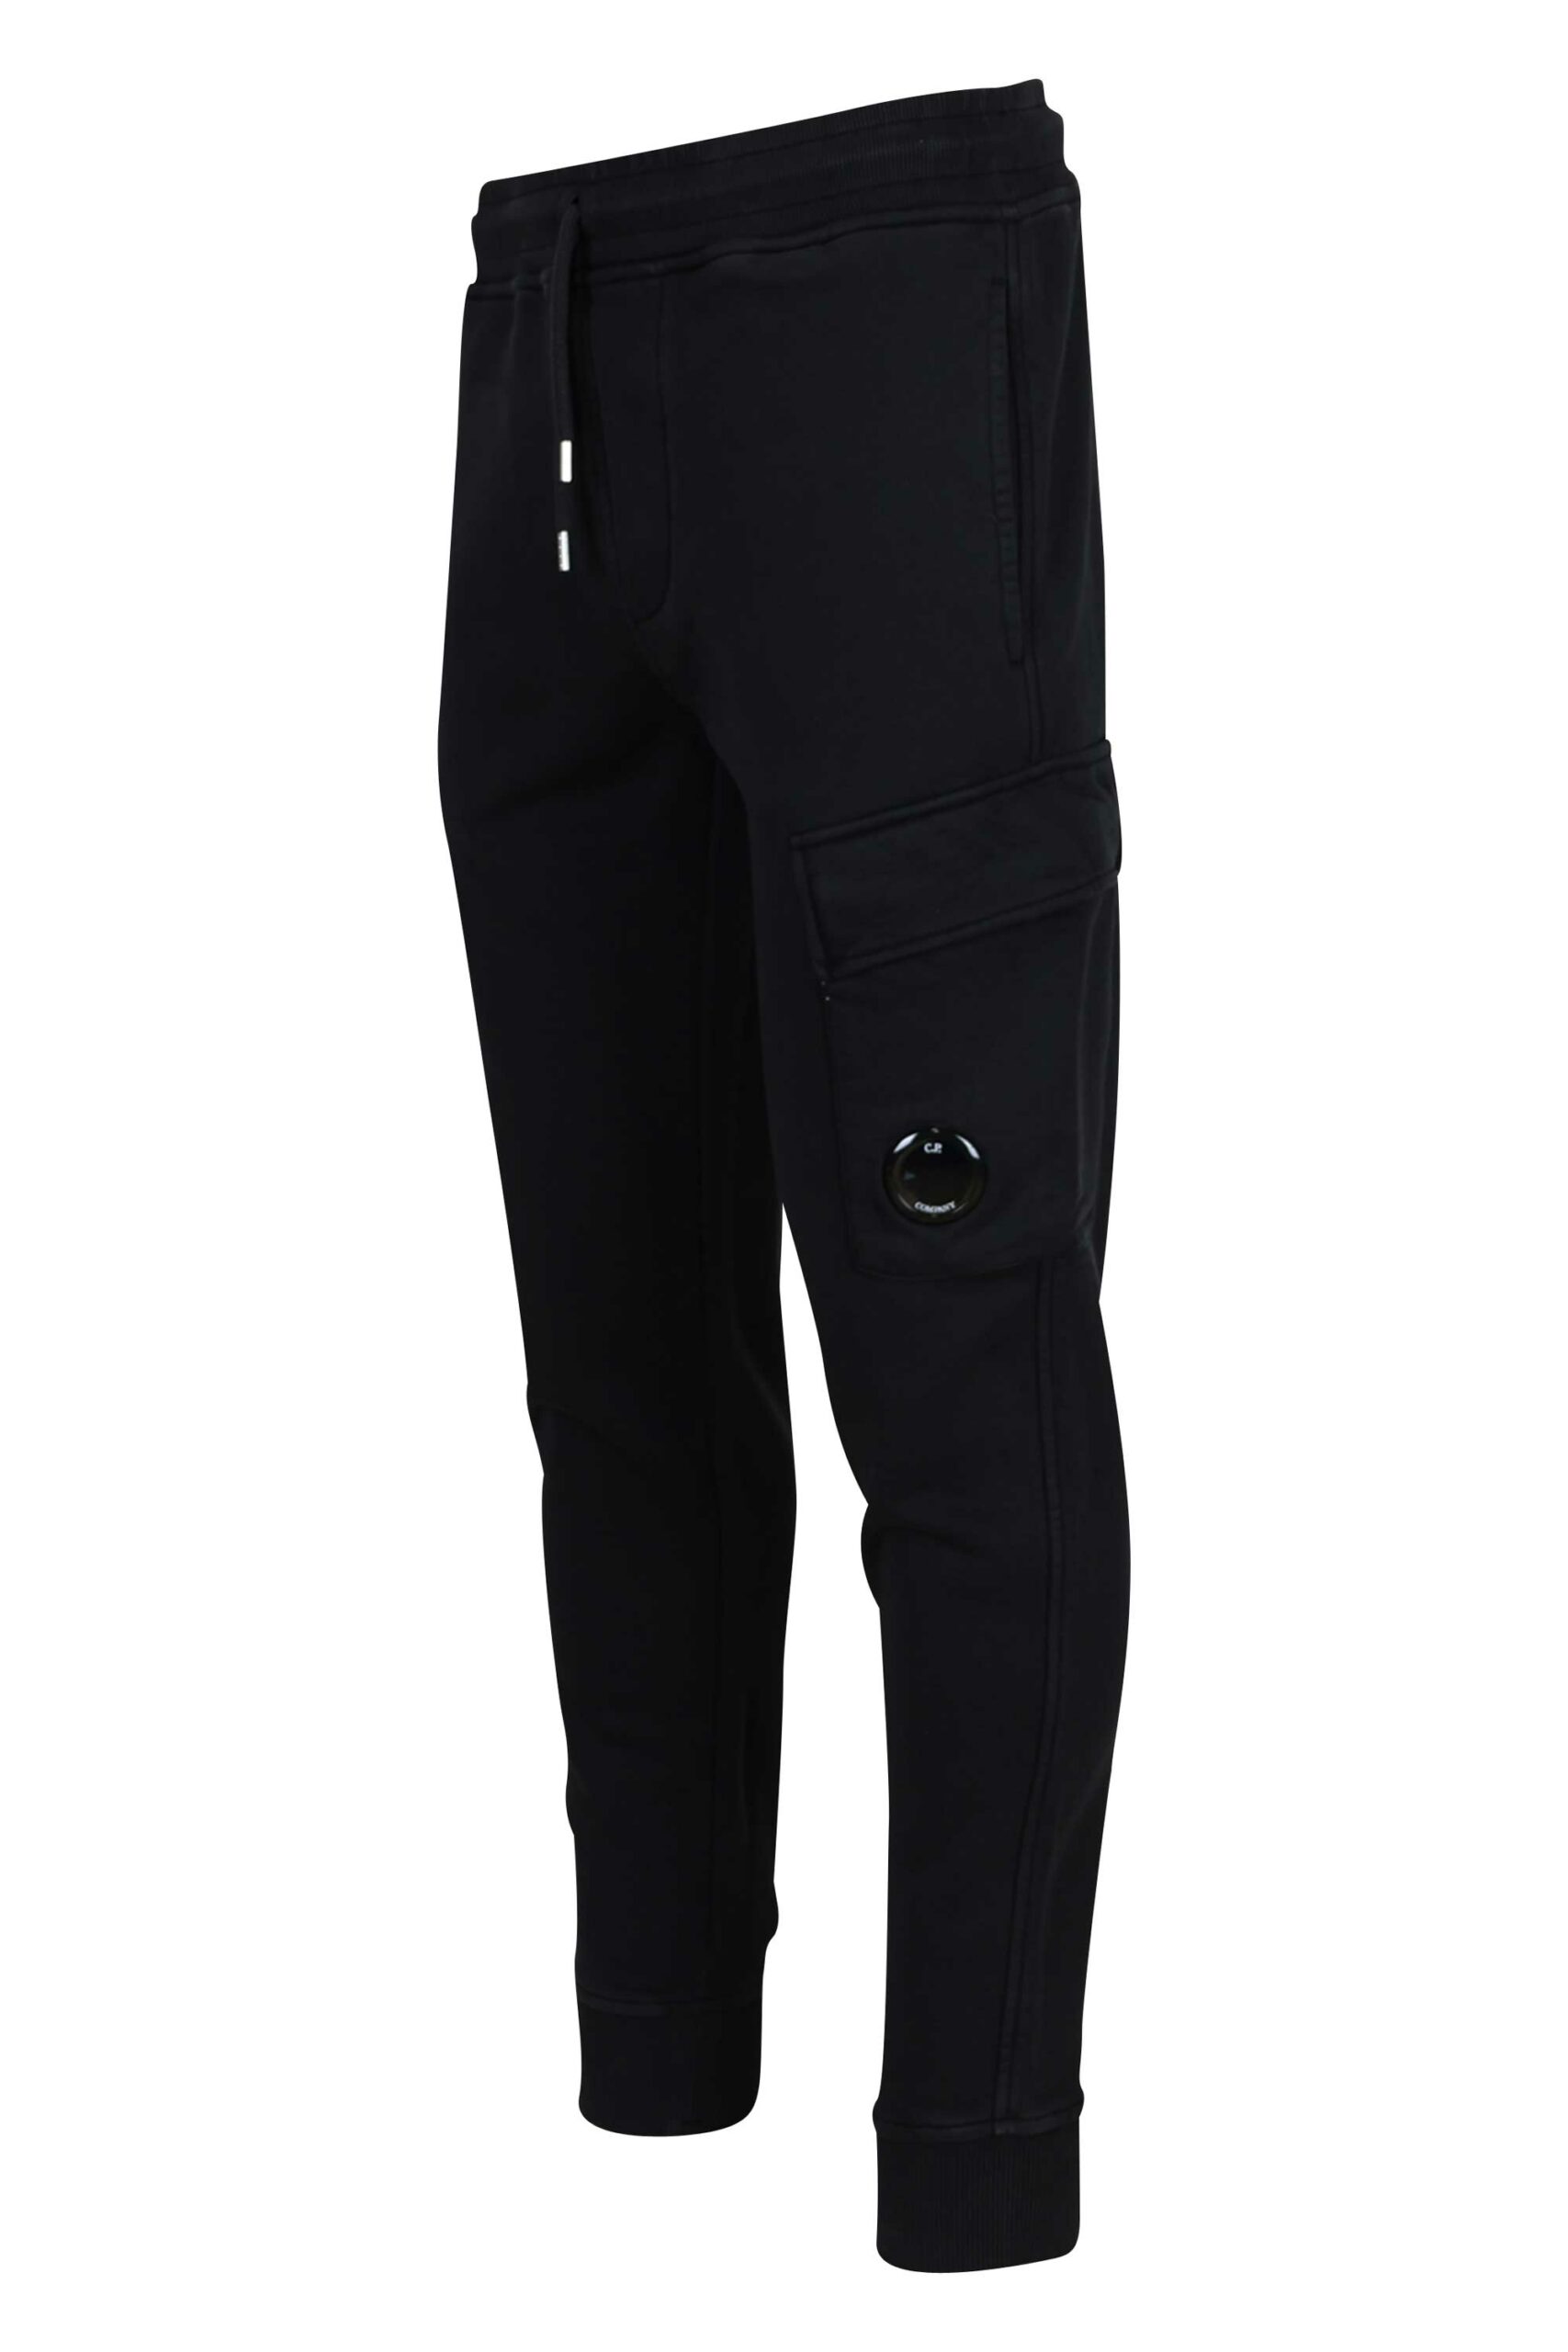 C.P. Company - Pantalón corto negro con bolsillos laterales y minilogo  circular - BLS Fashion